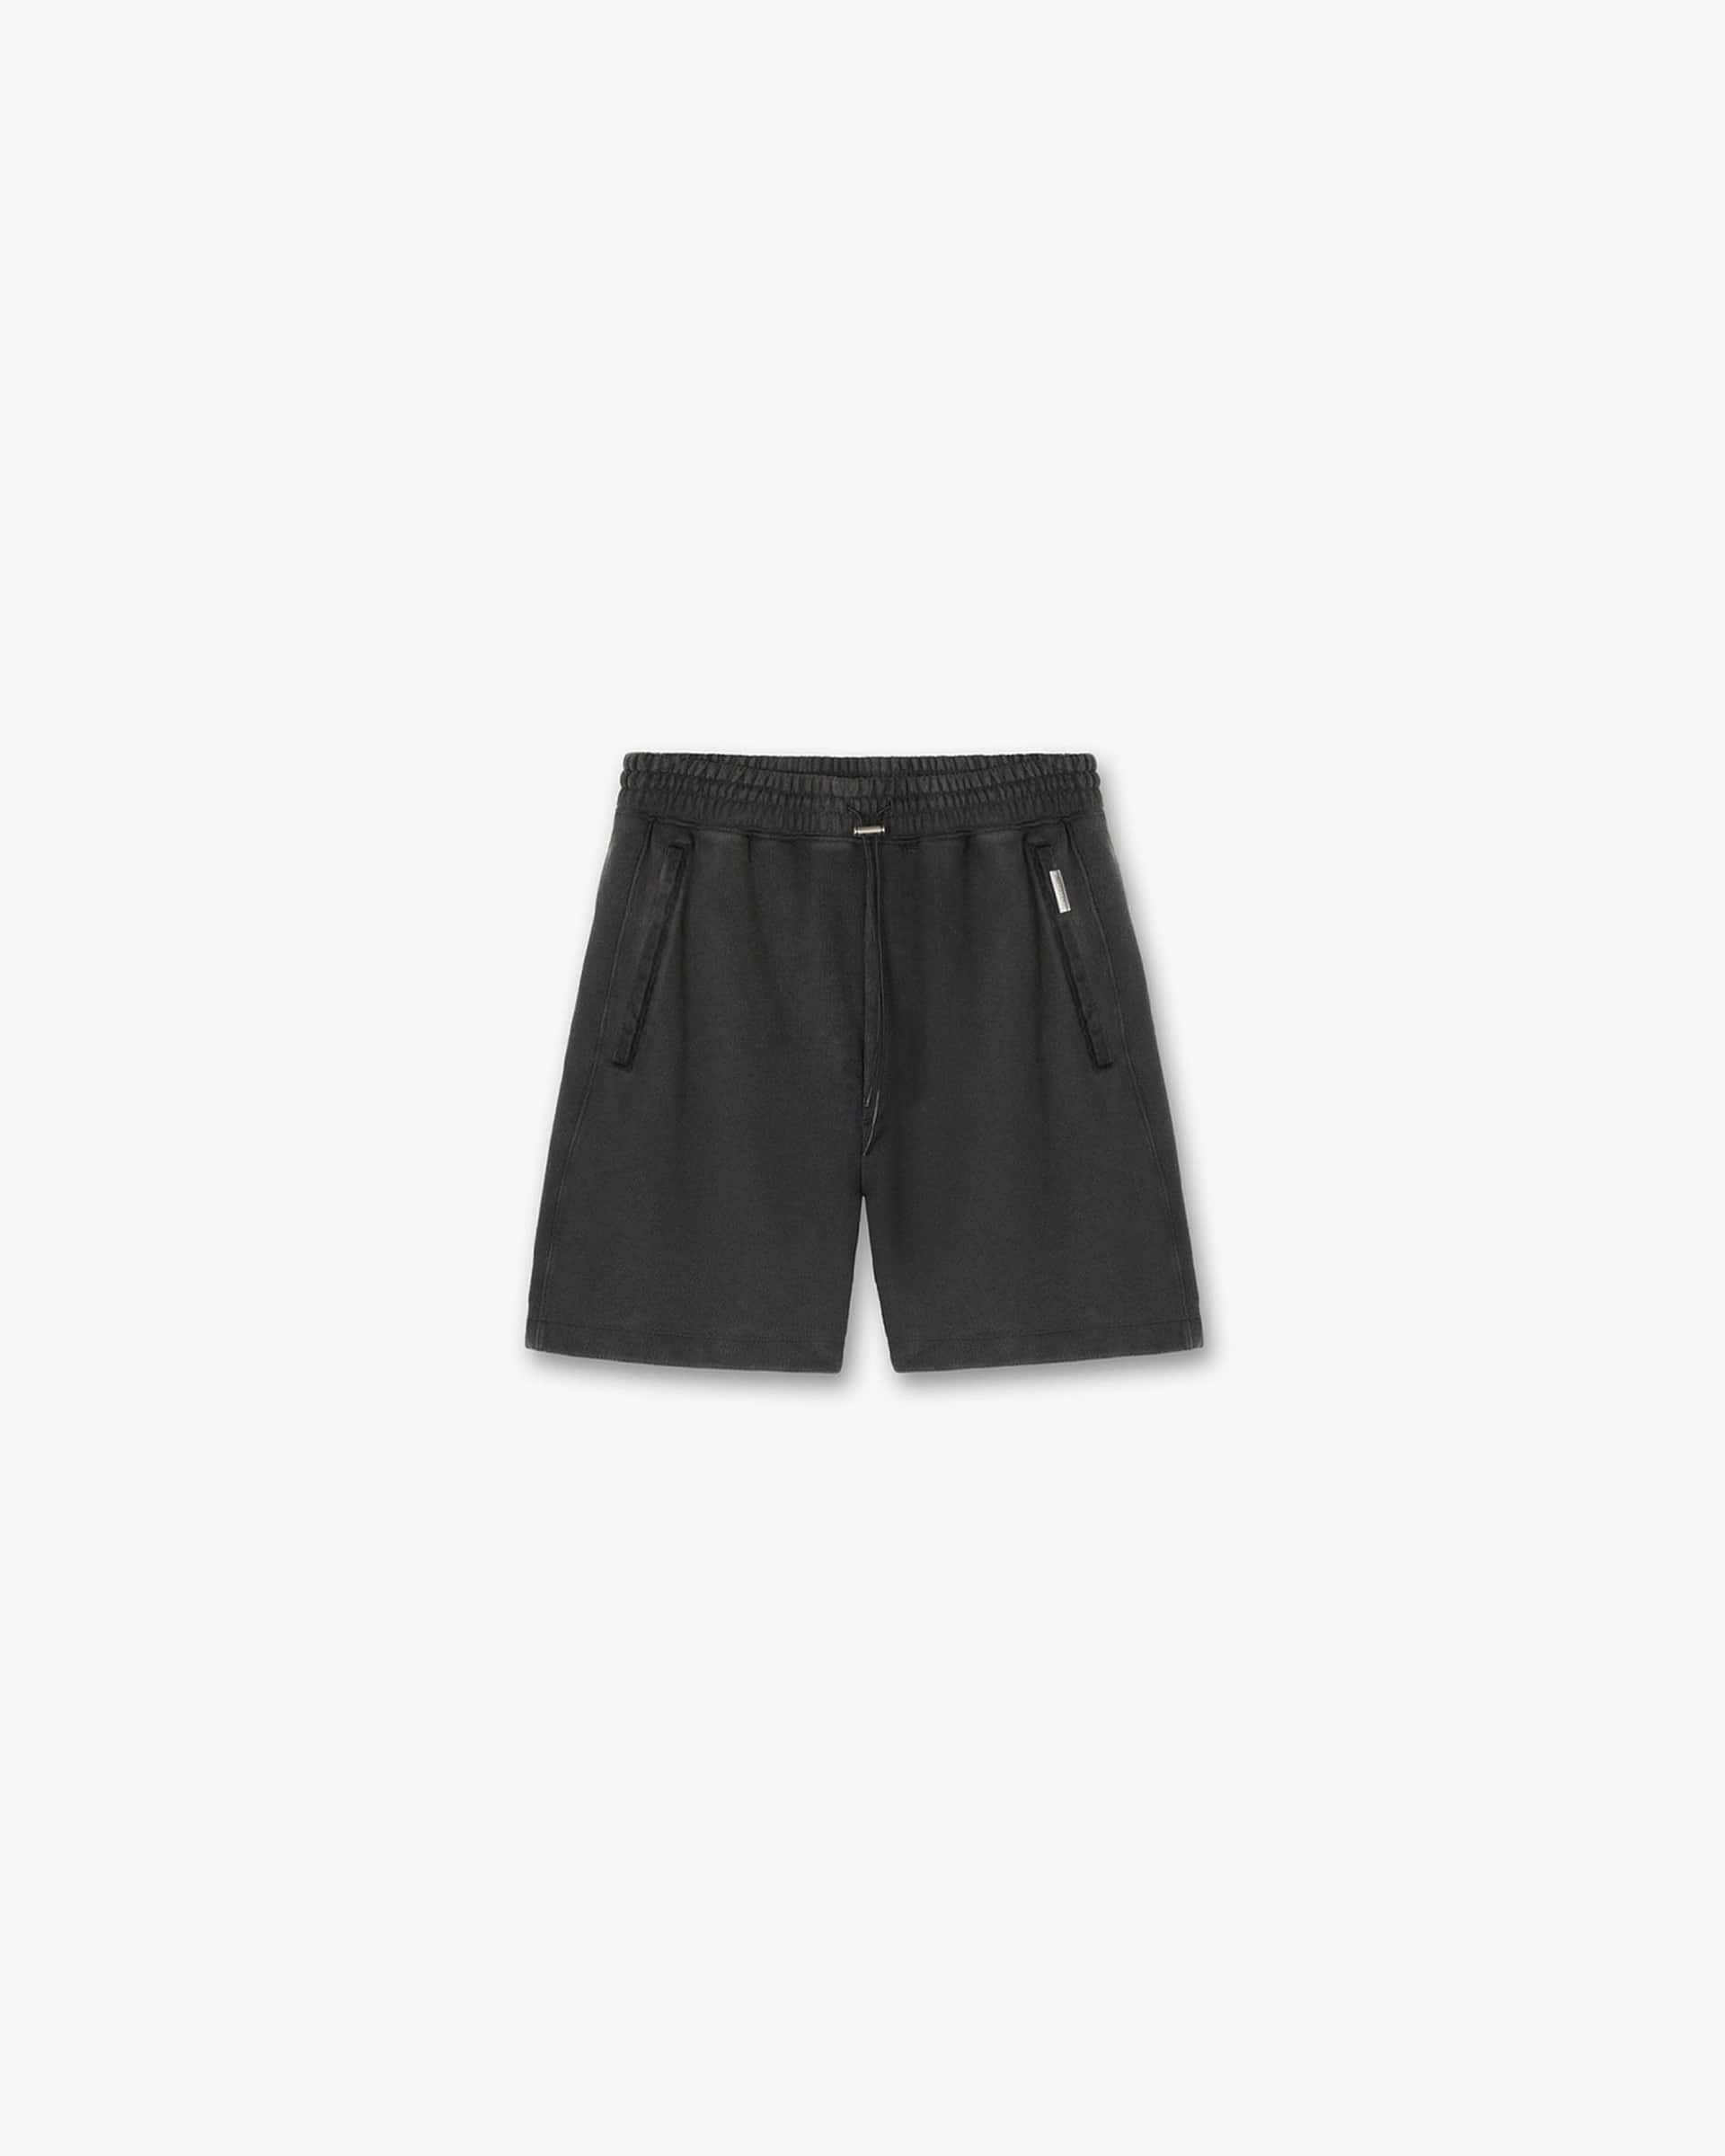 Blank Shorts - Vintage Black